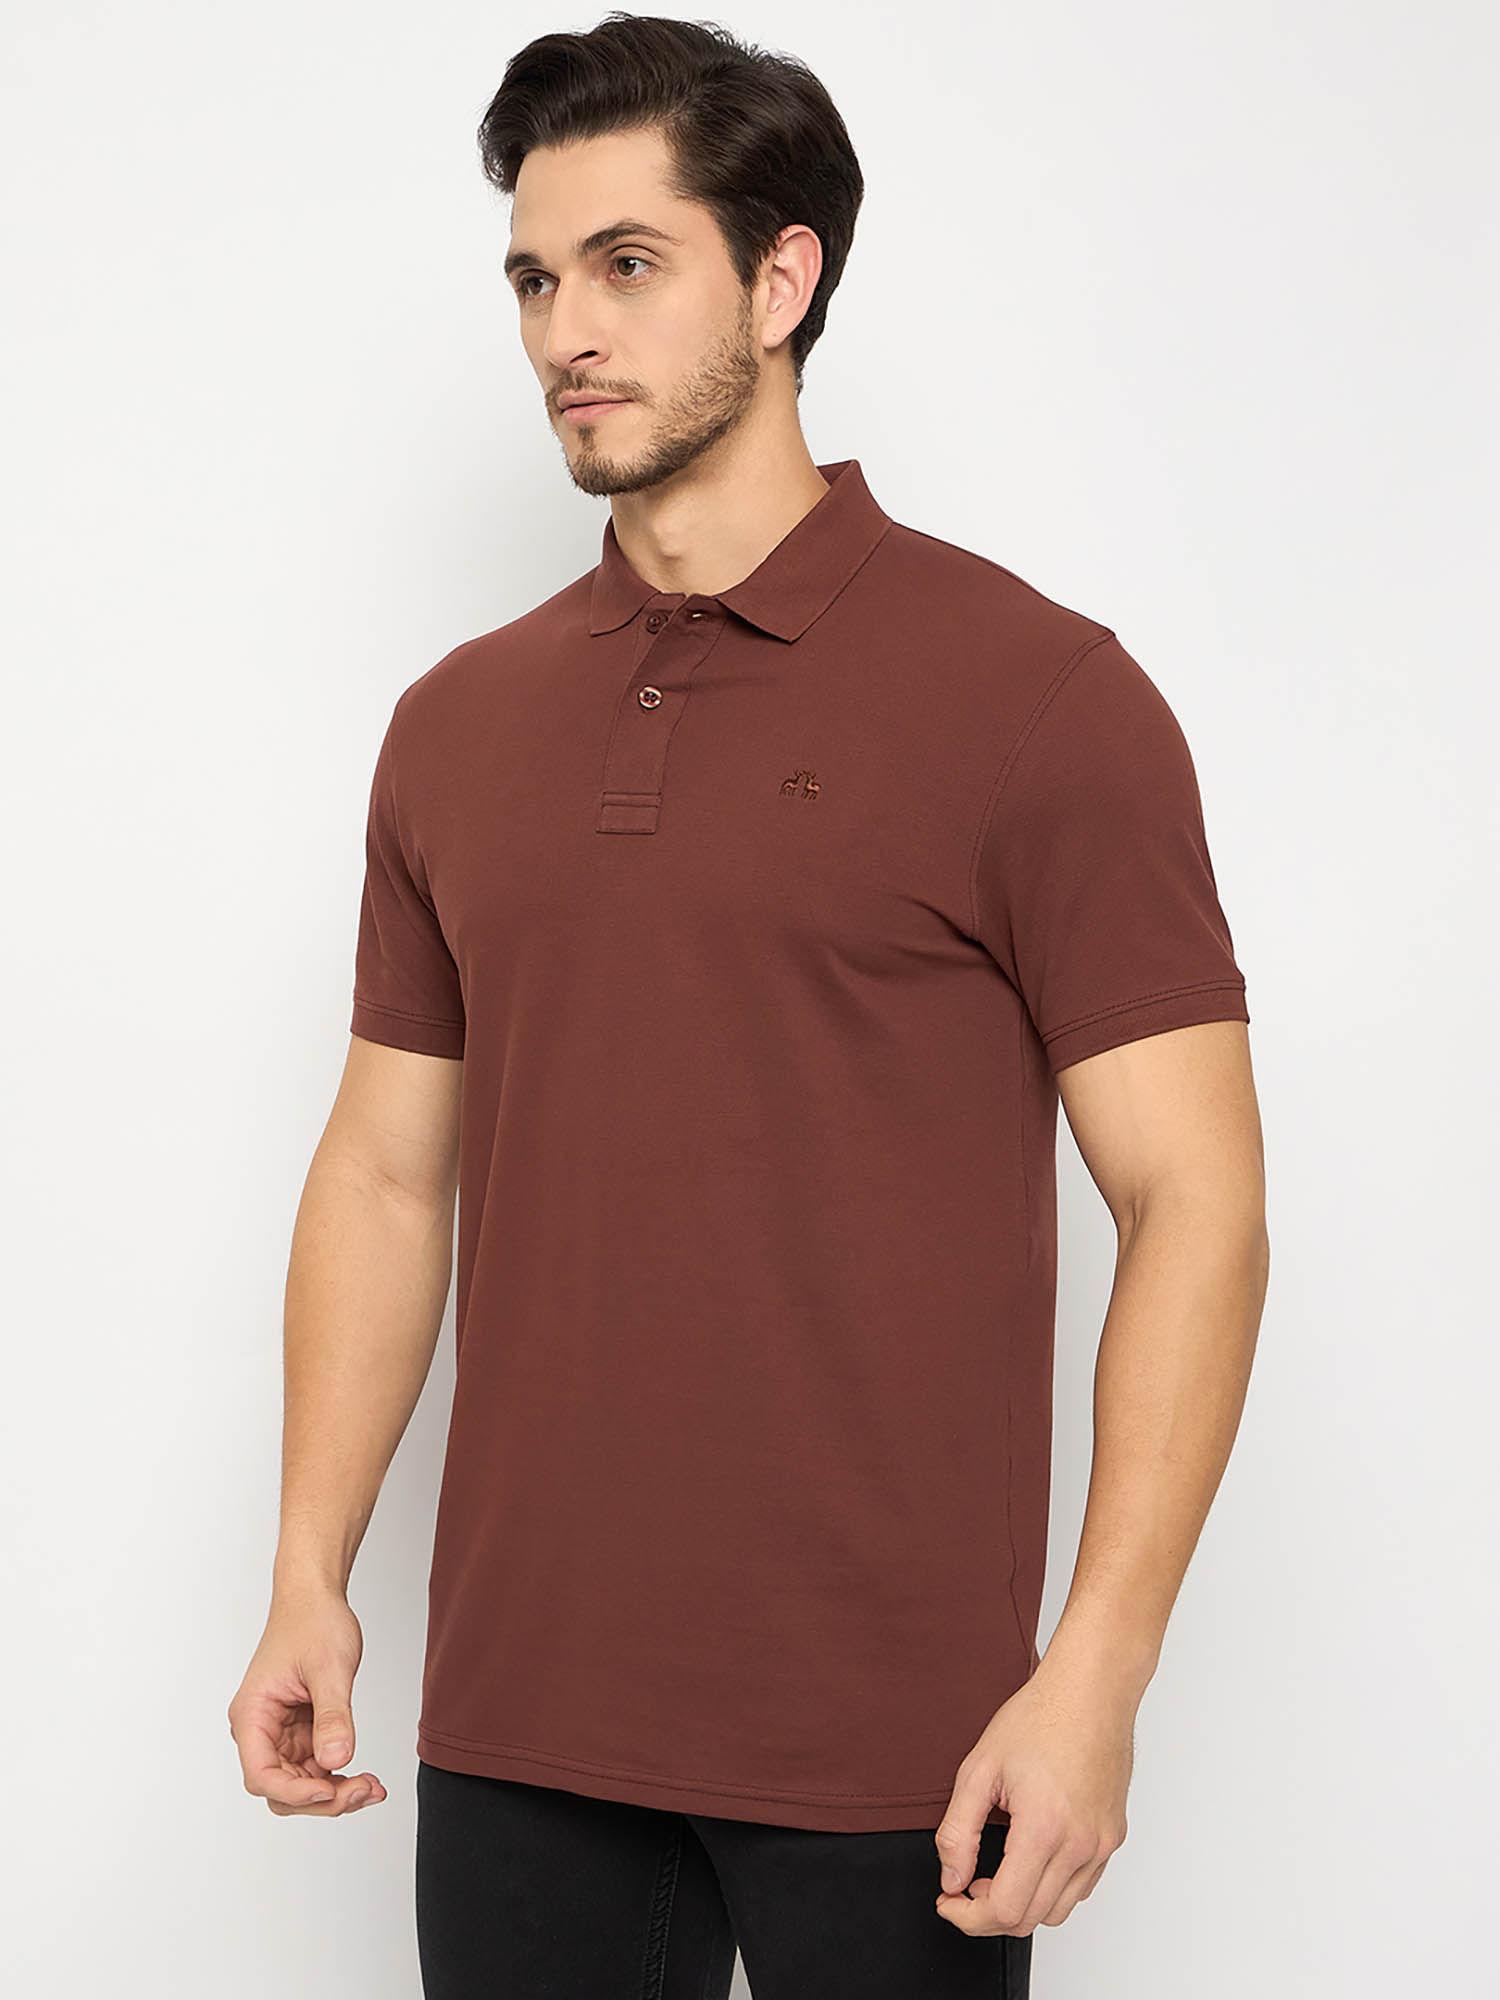 mens half sleeves rust polo t-shirt